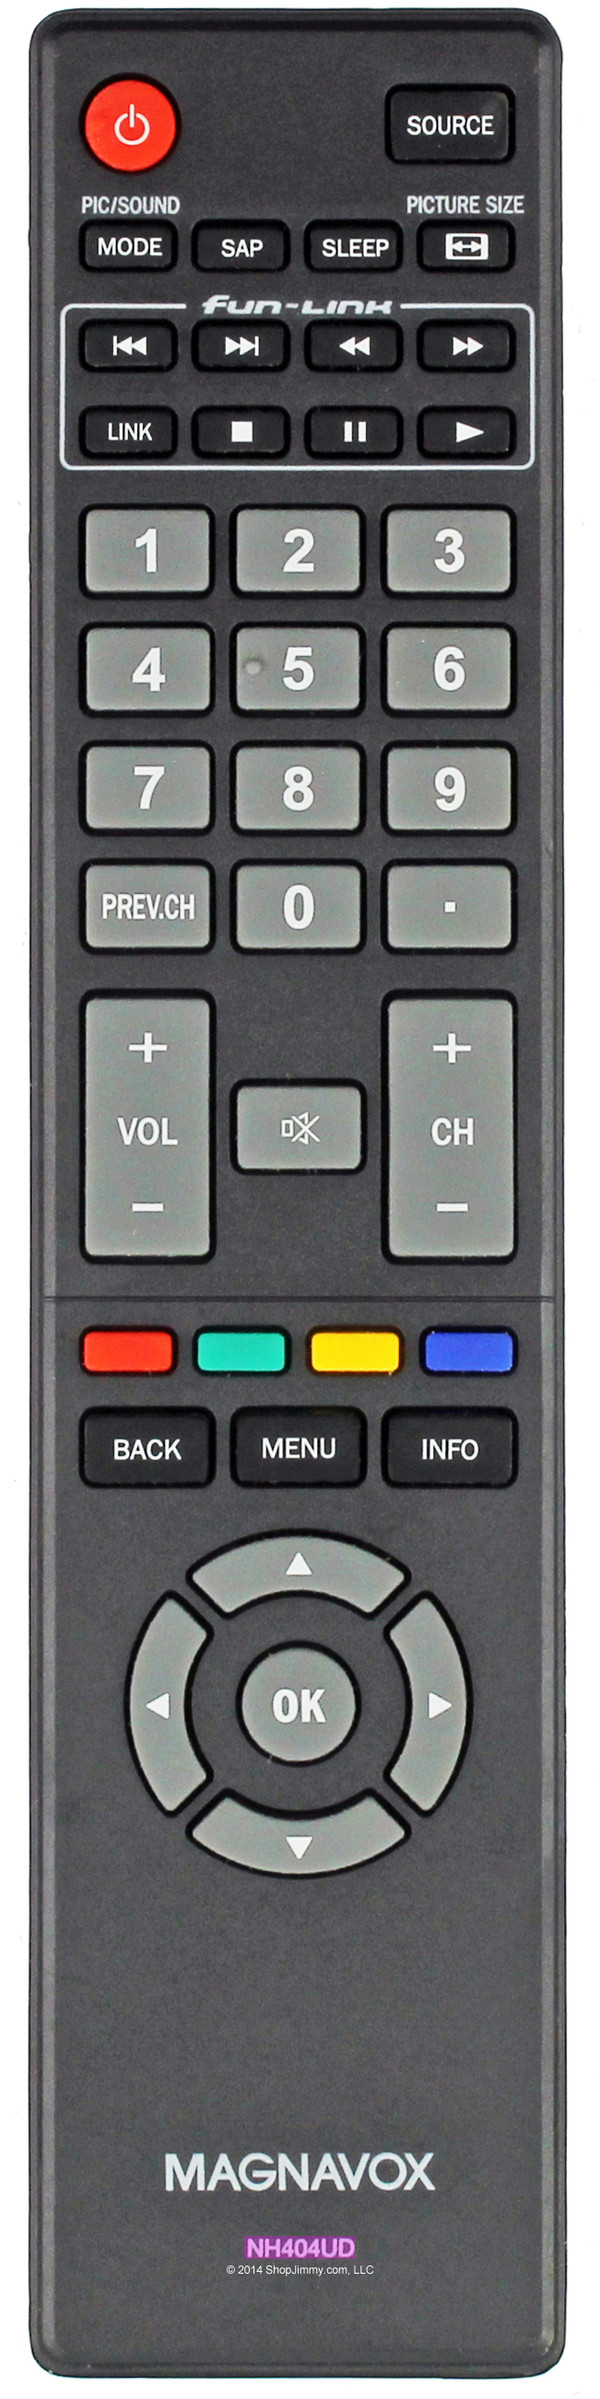 Magnavox NH404UD Remote Control - Used